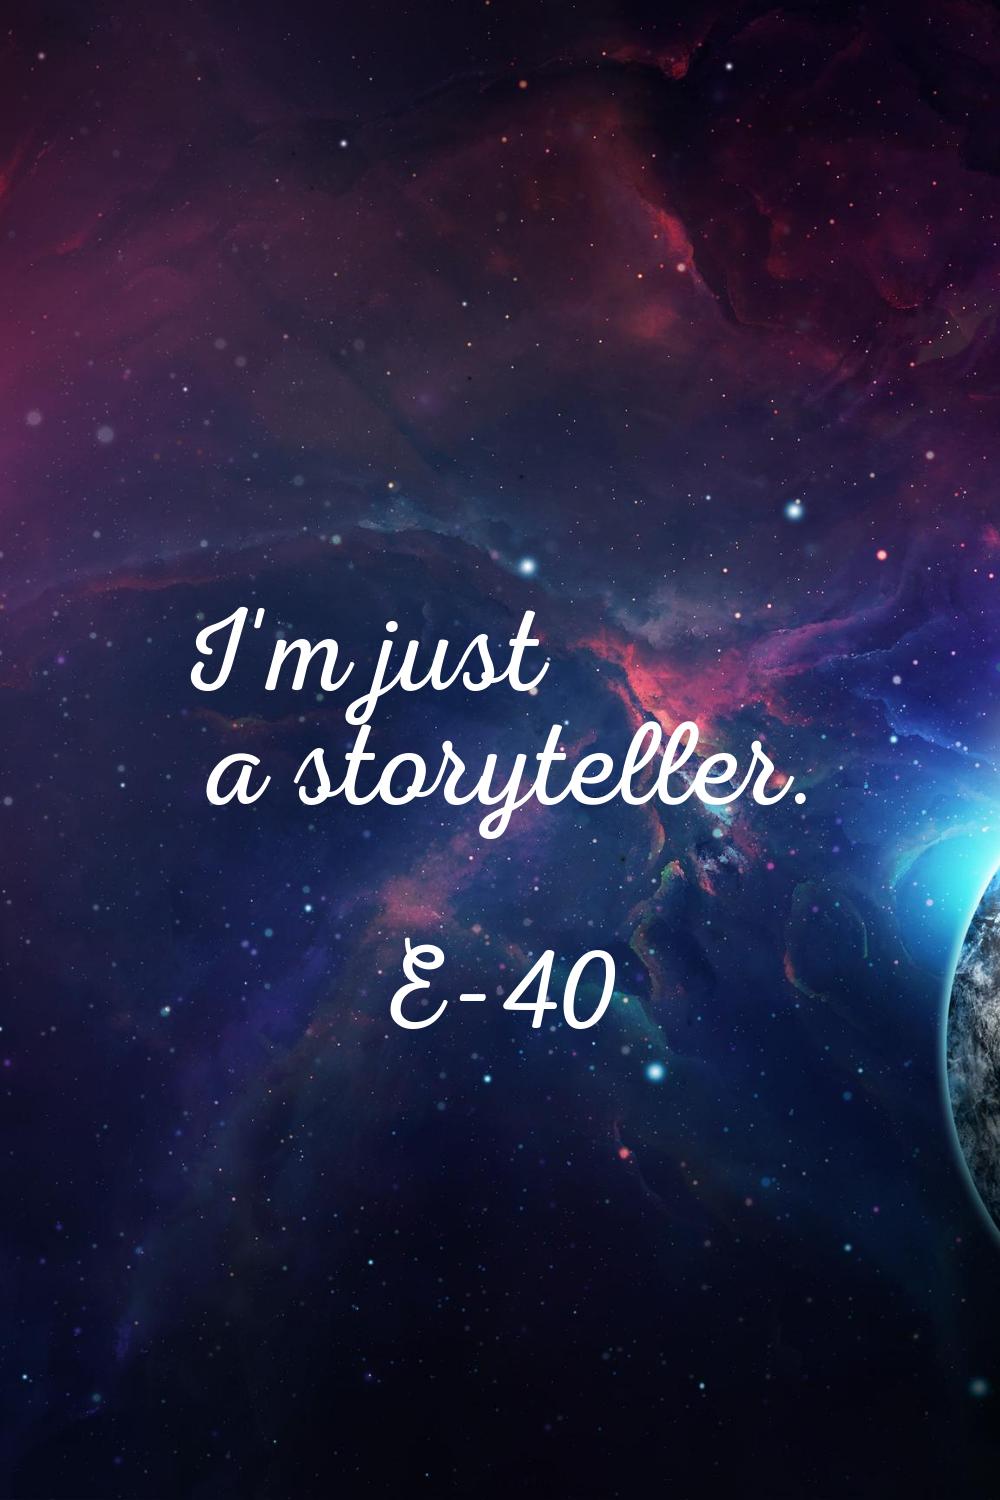 I'm just a storyteller.